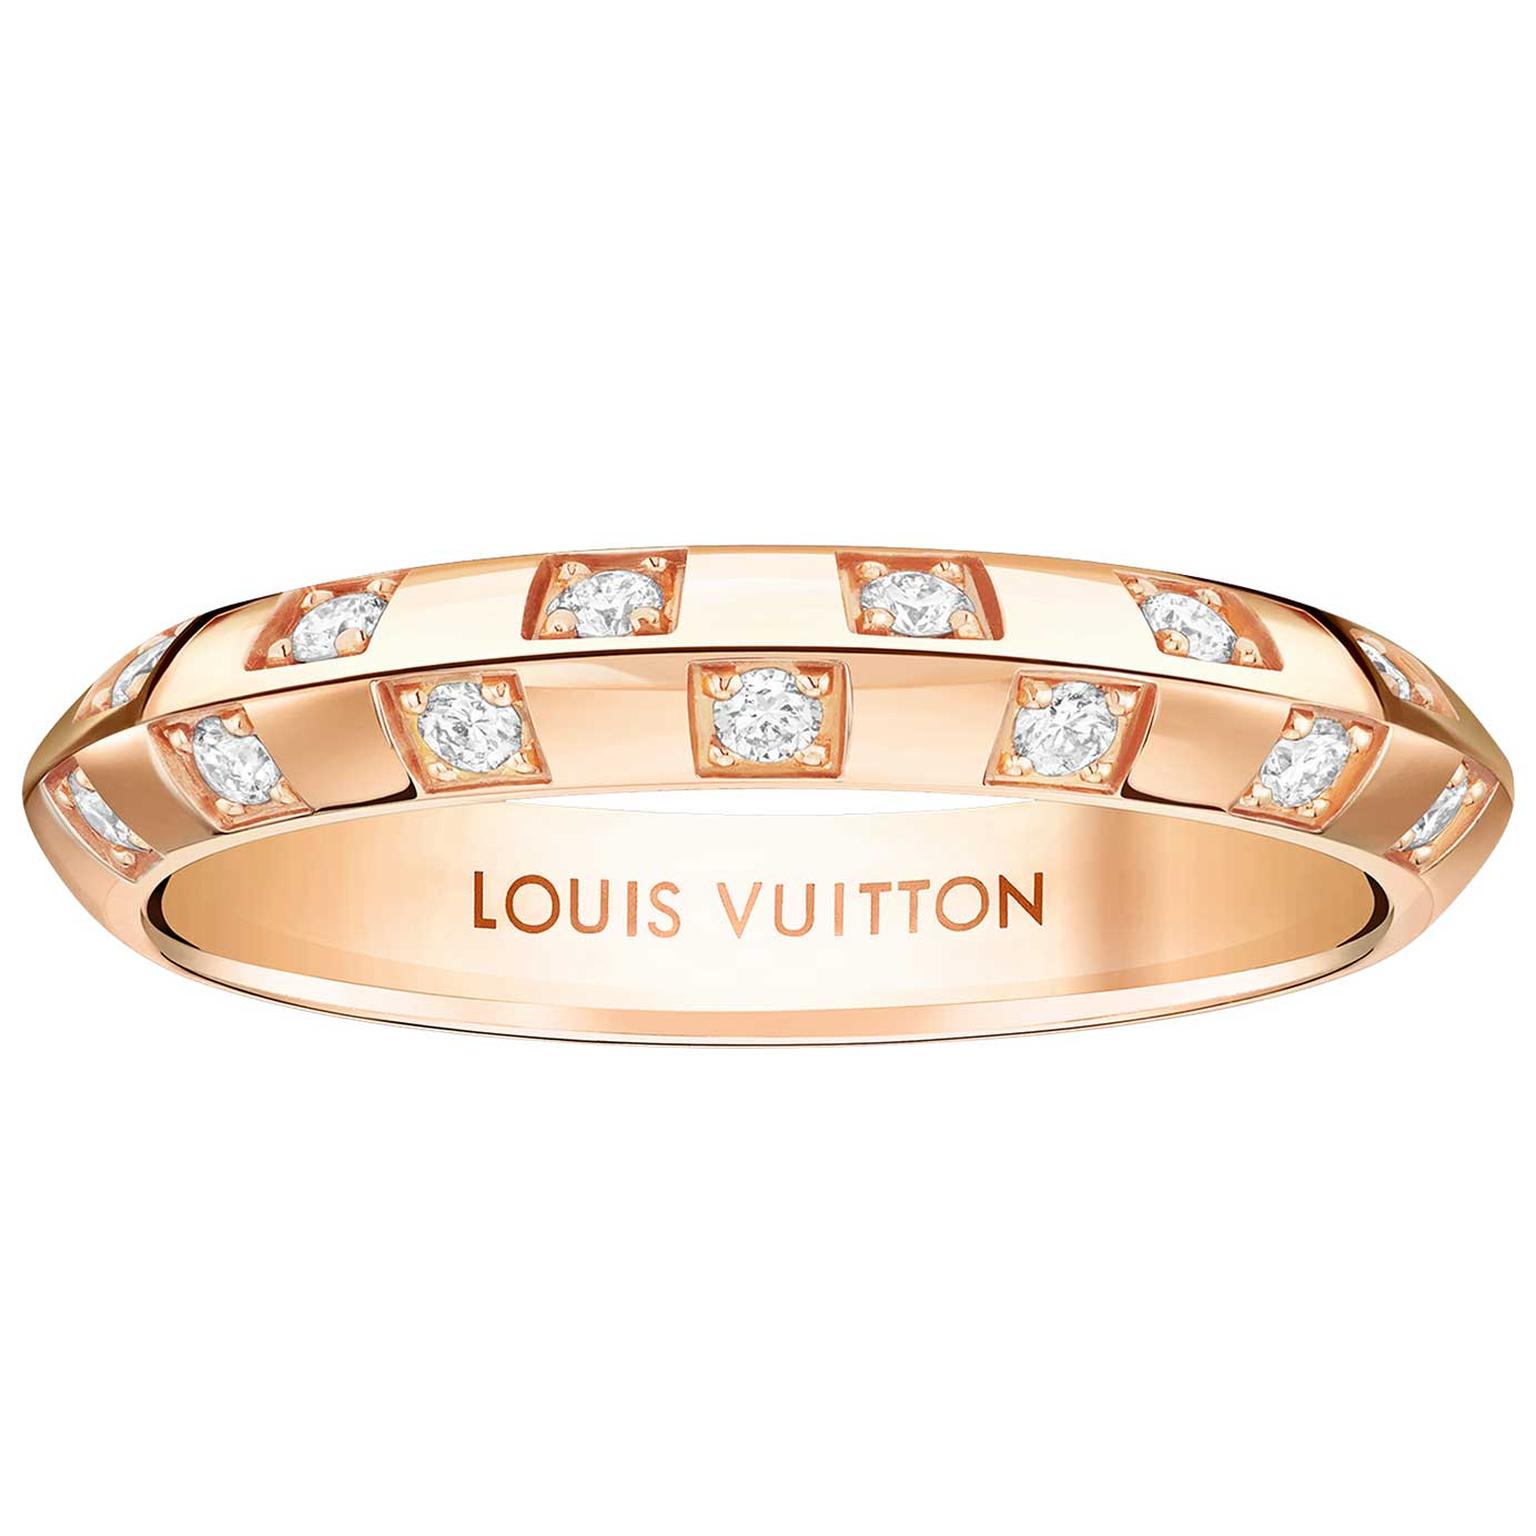 Louis Vuitton Damier ring rose gold and diamonds